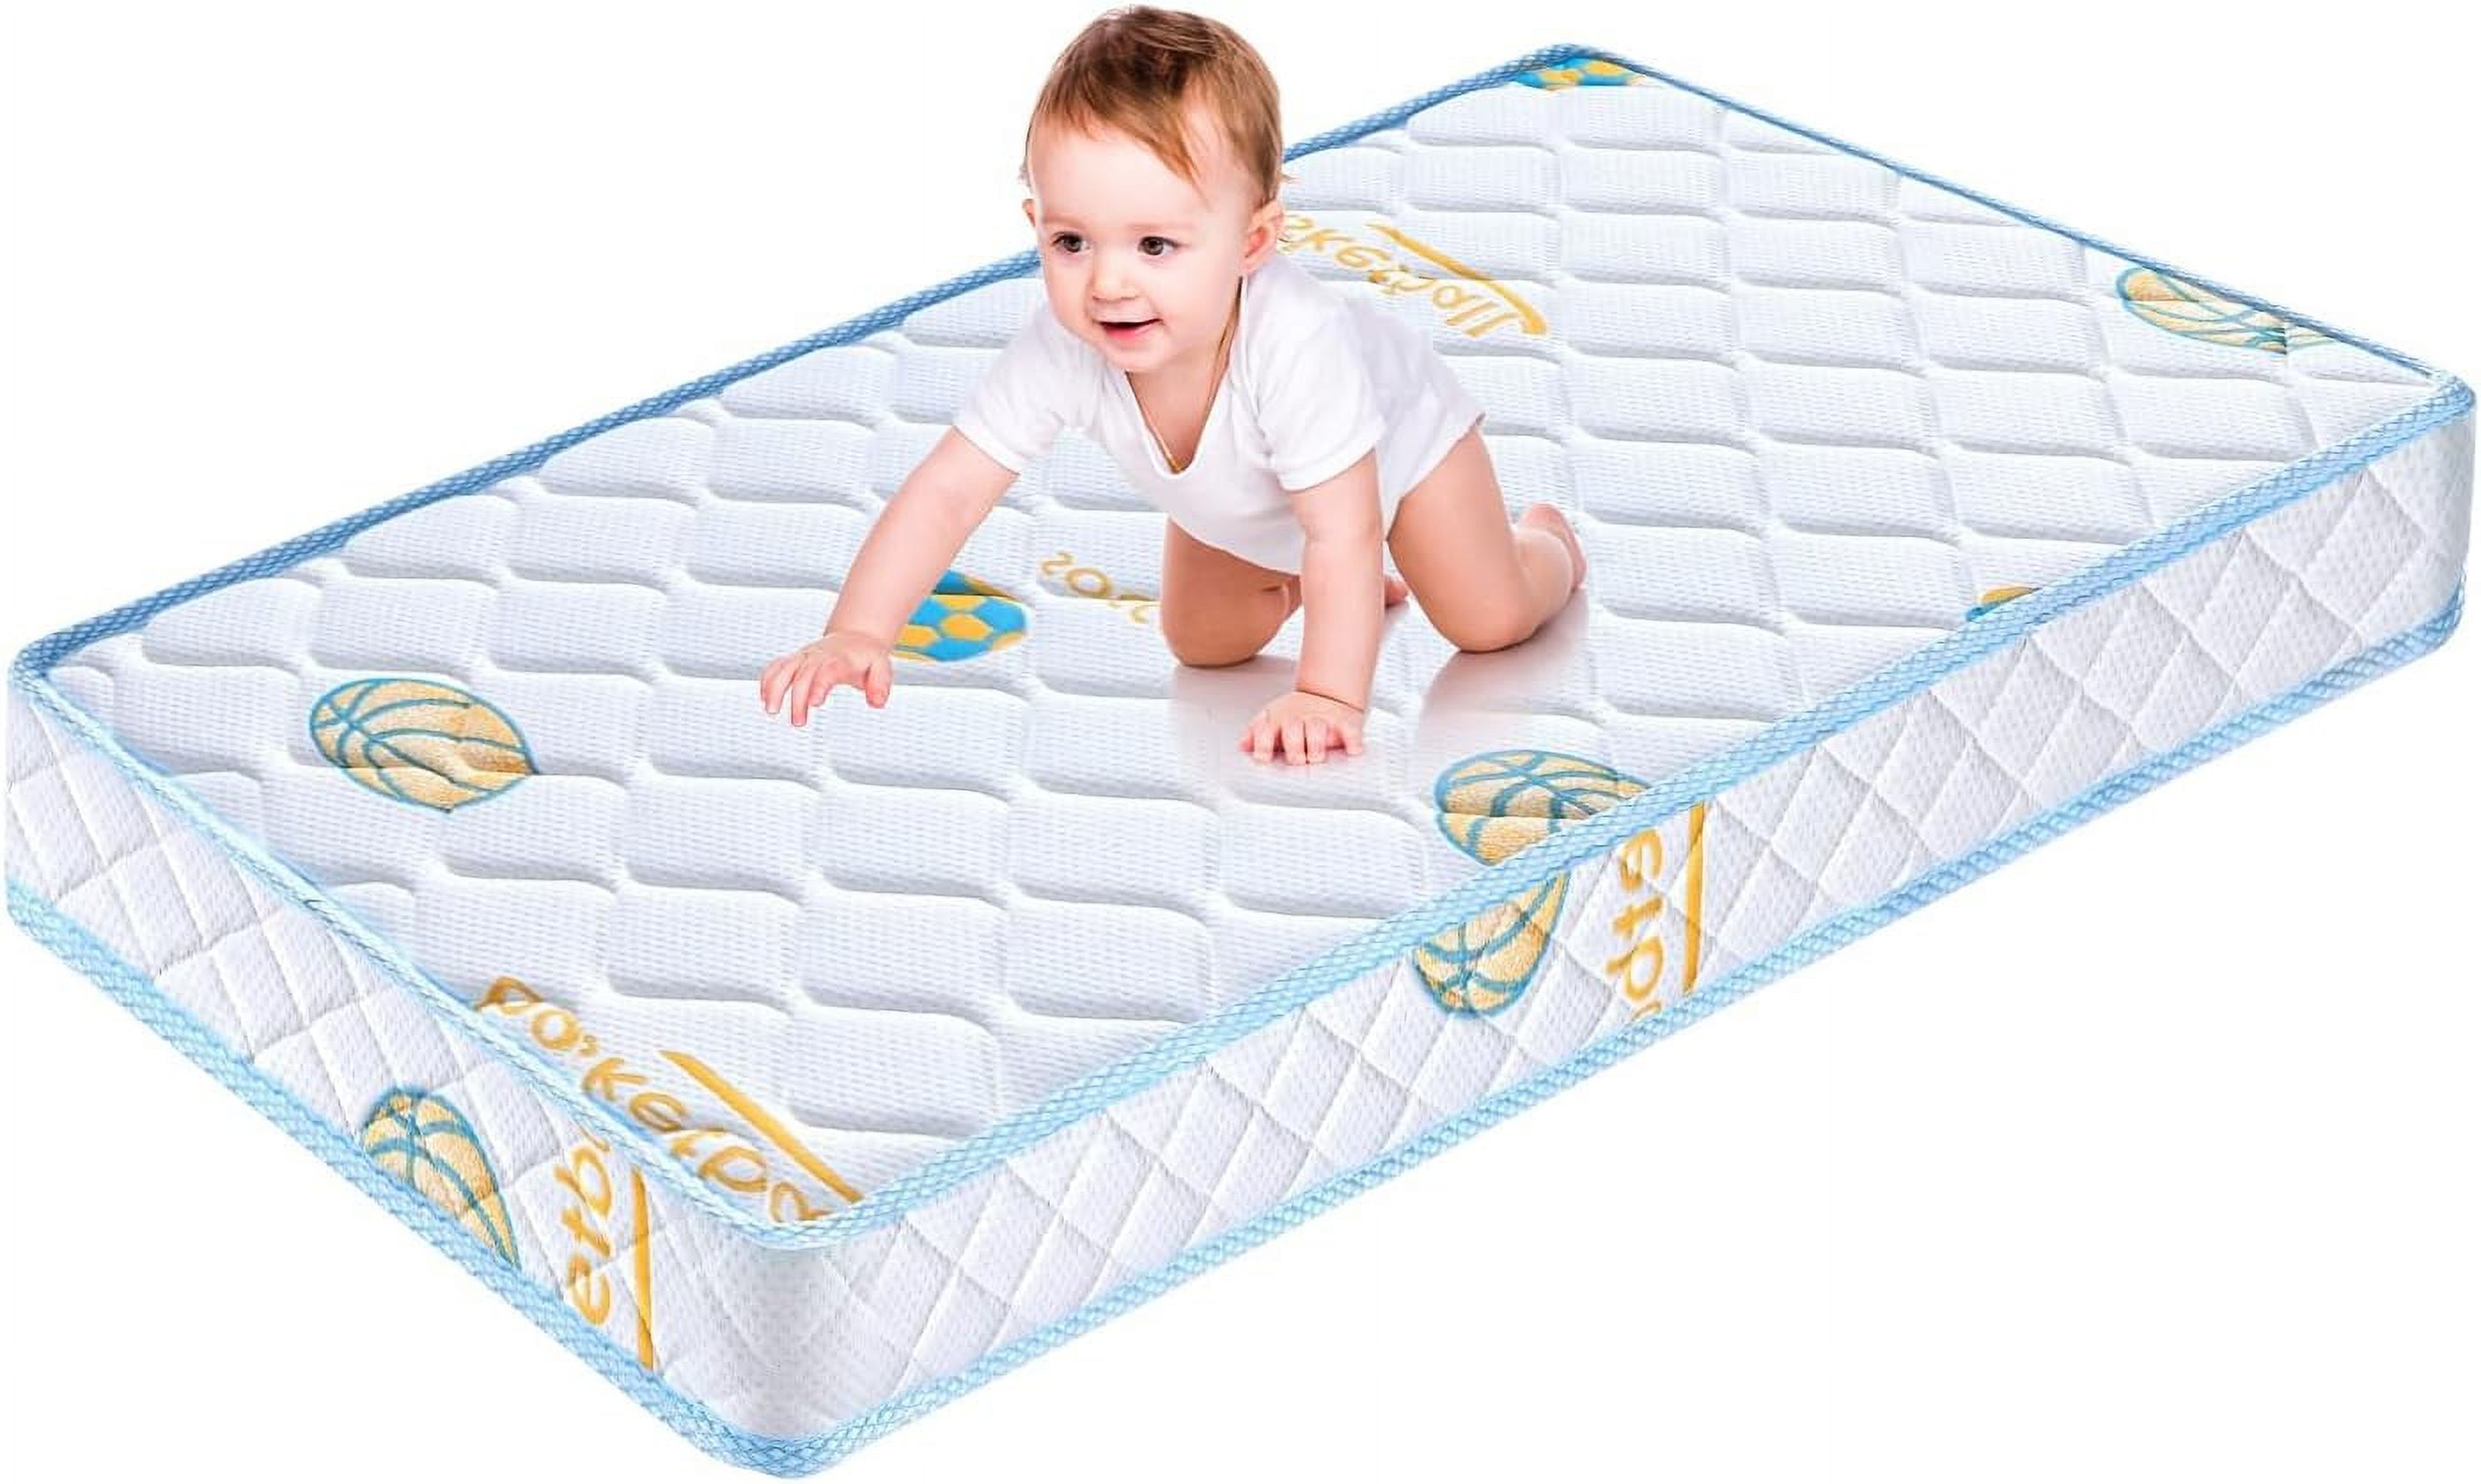 Smiaoer 4.5 inch Memory Foam Crib & Toddler Mattress for Standard Full Size  Crib, Cute Cartoon Print, Premium Firm